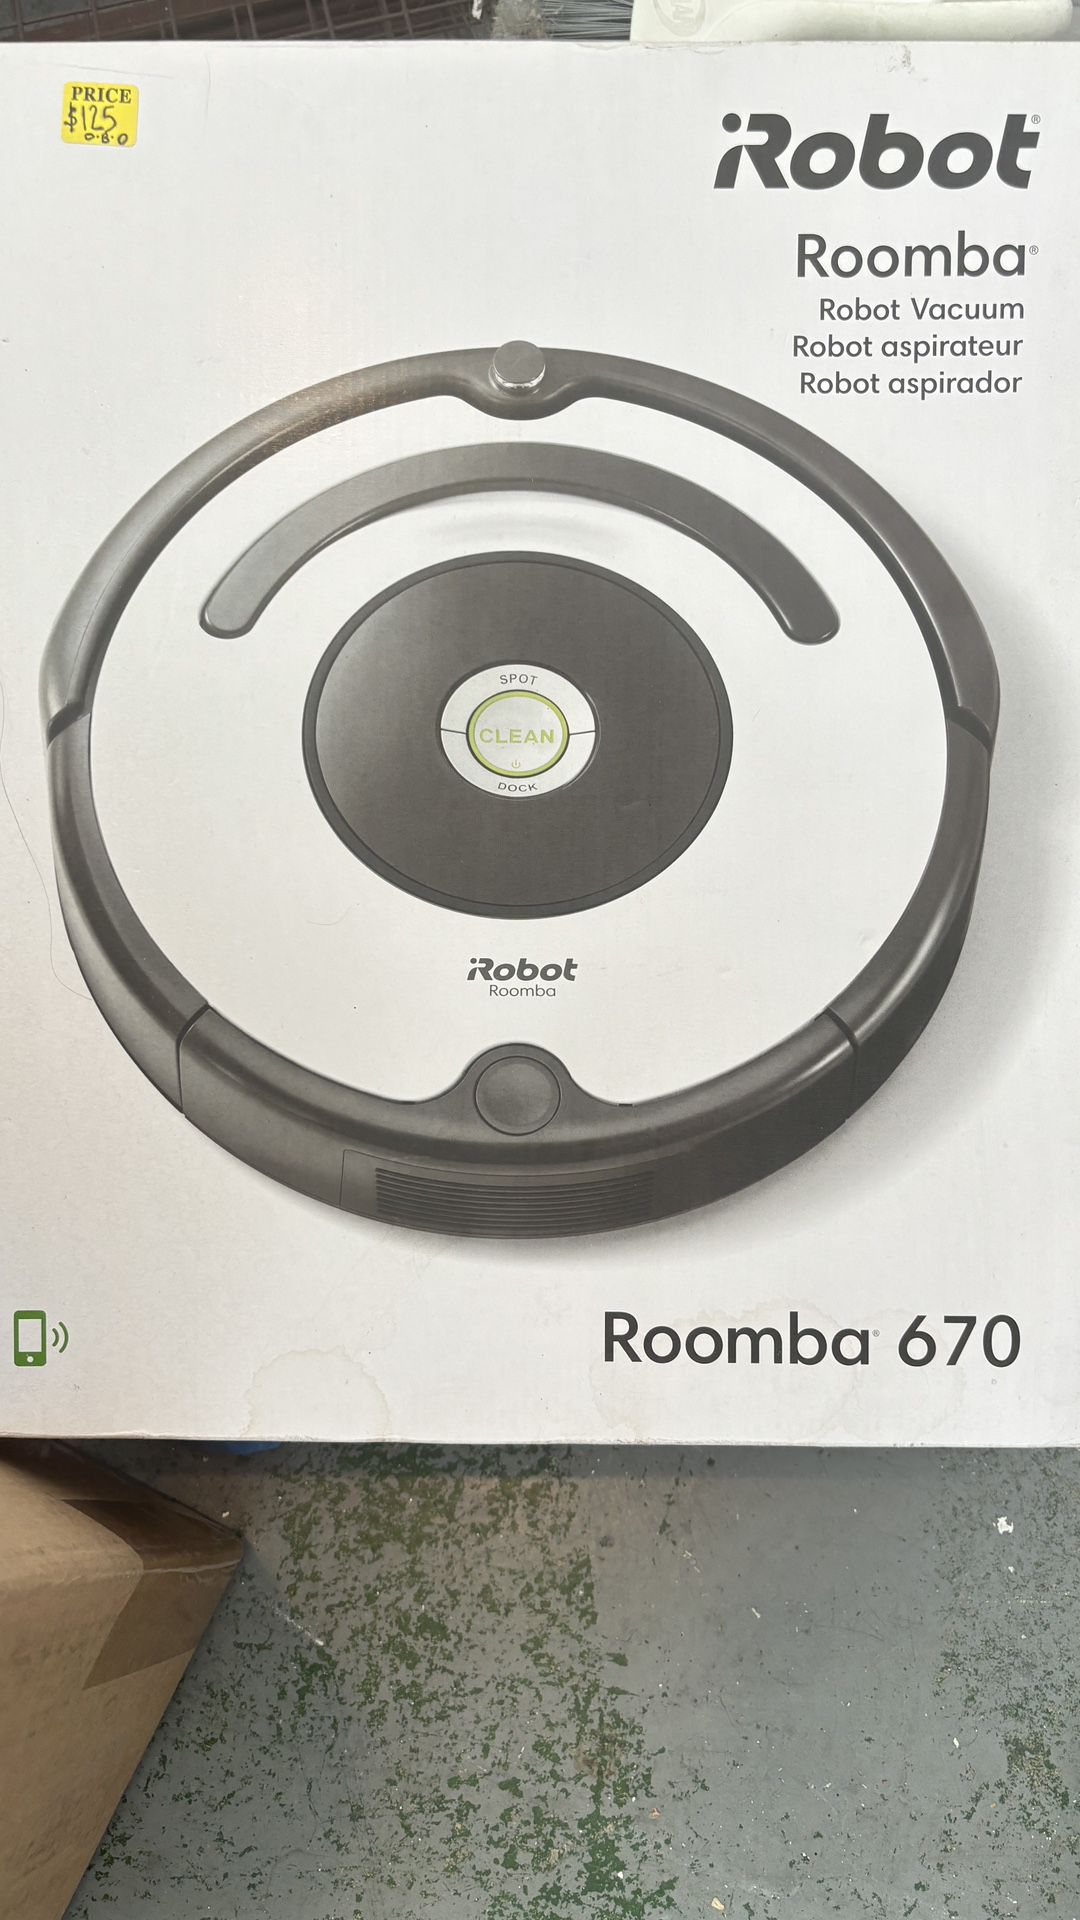 Robot roomba $15